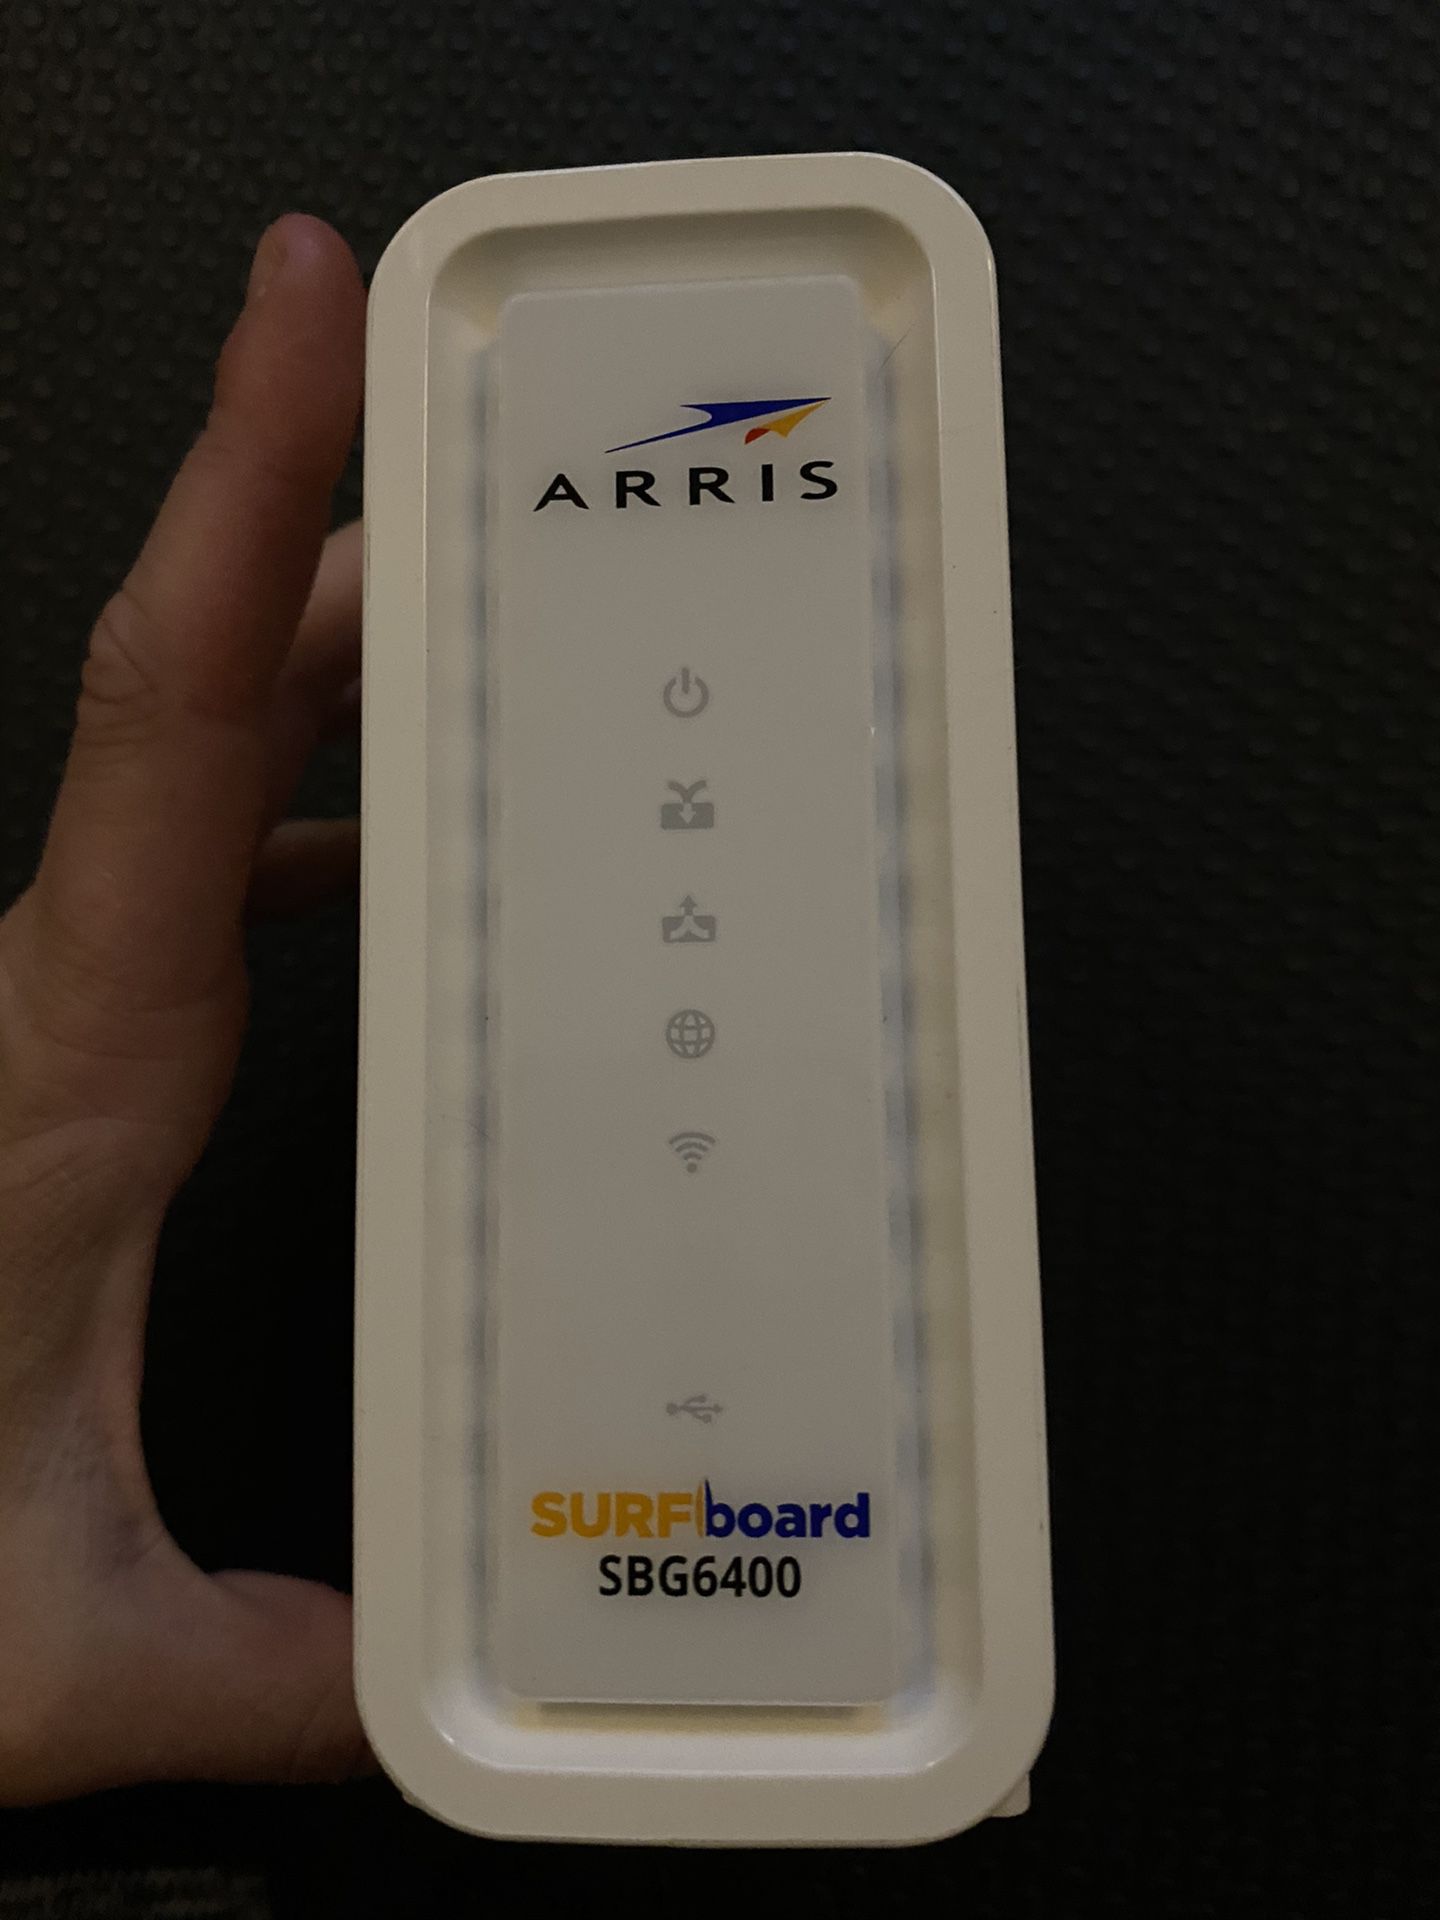 ARRIS SURFboard Cable Modem